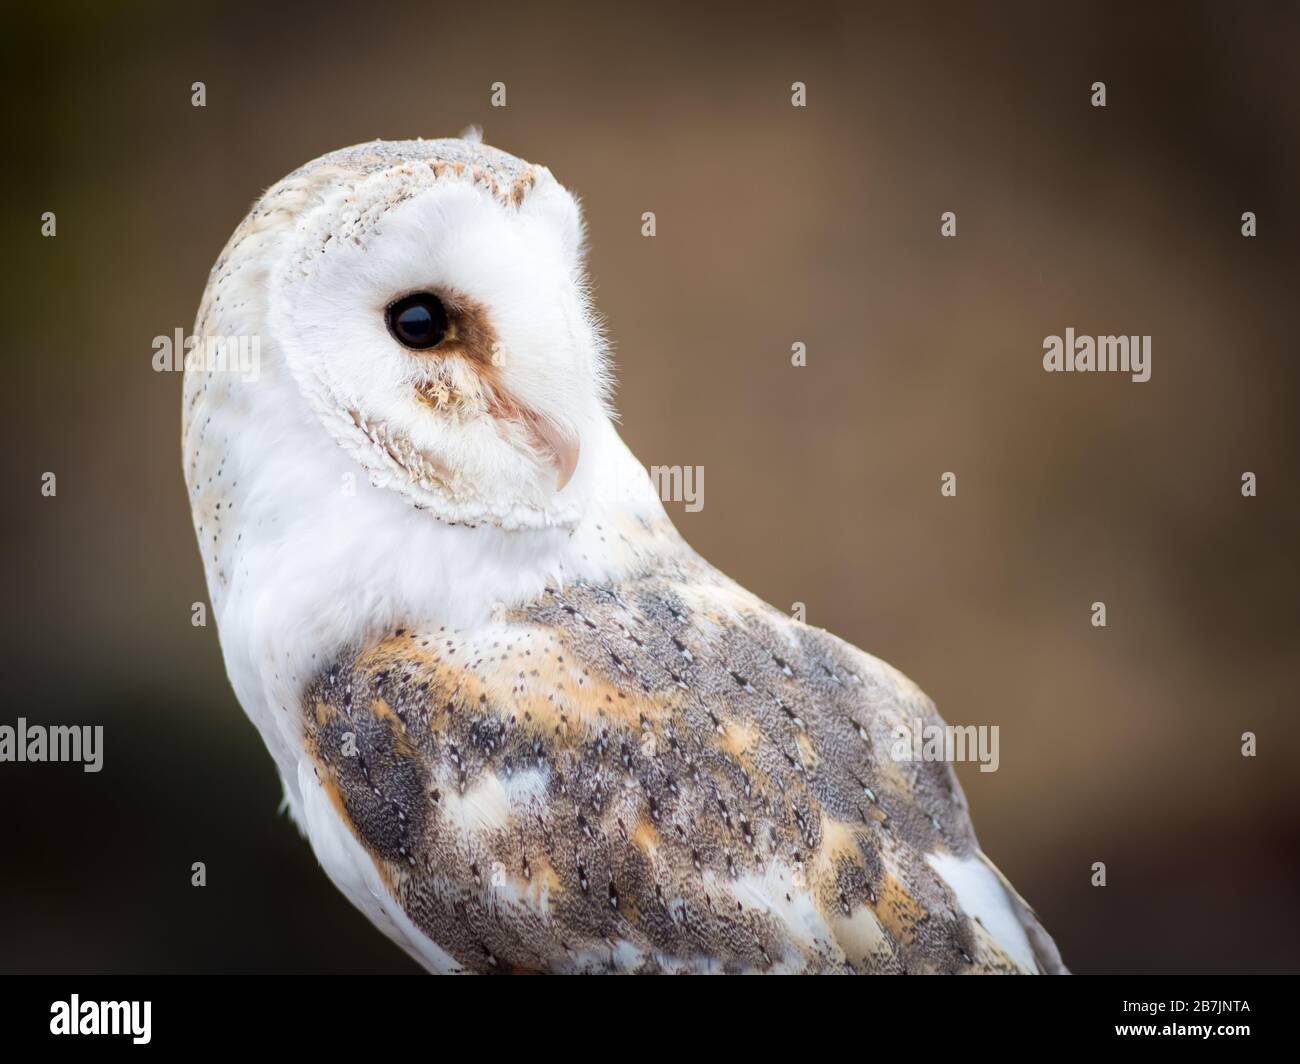 Close up portrait of big beautiful owl with big eyes Stock Photo